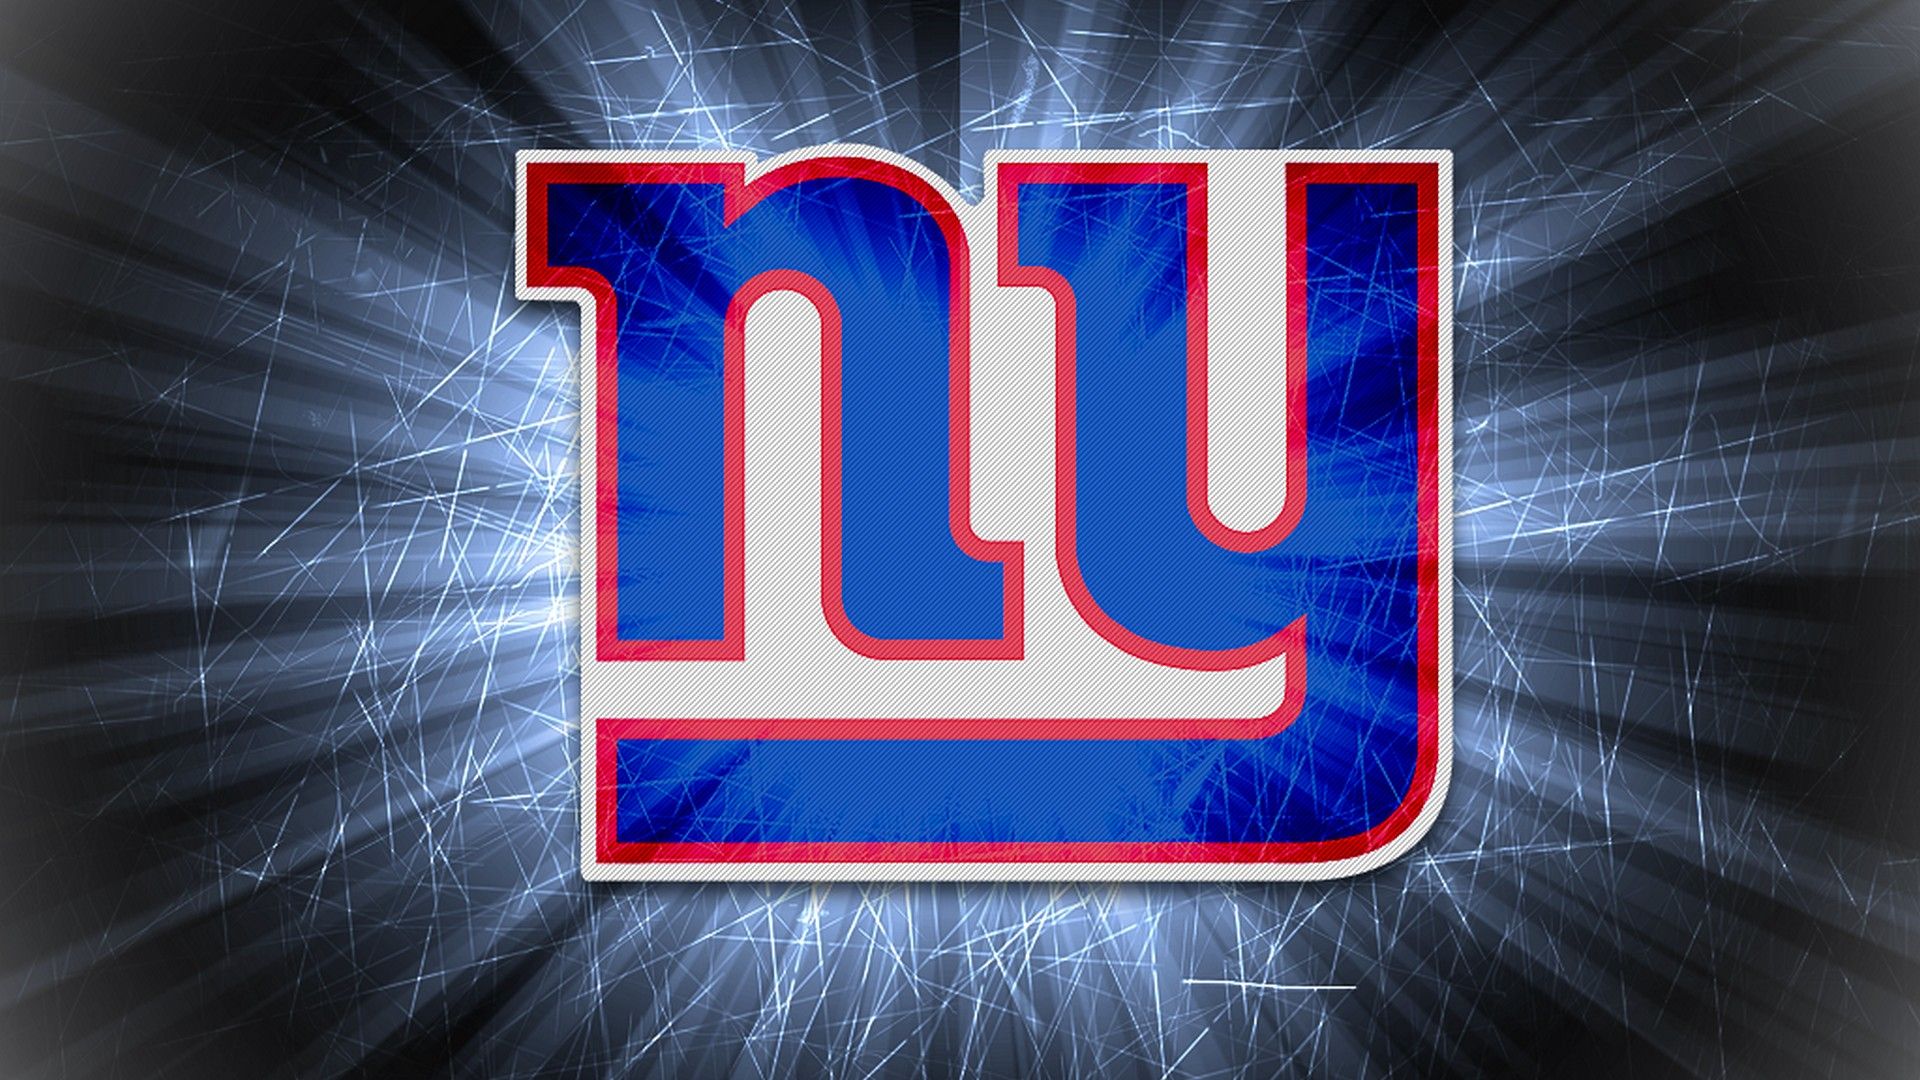 New York Giants HD Wallpaper NFL Football Wallpaper